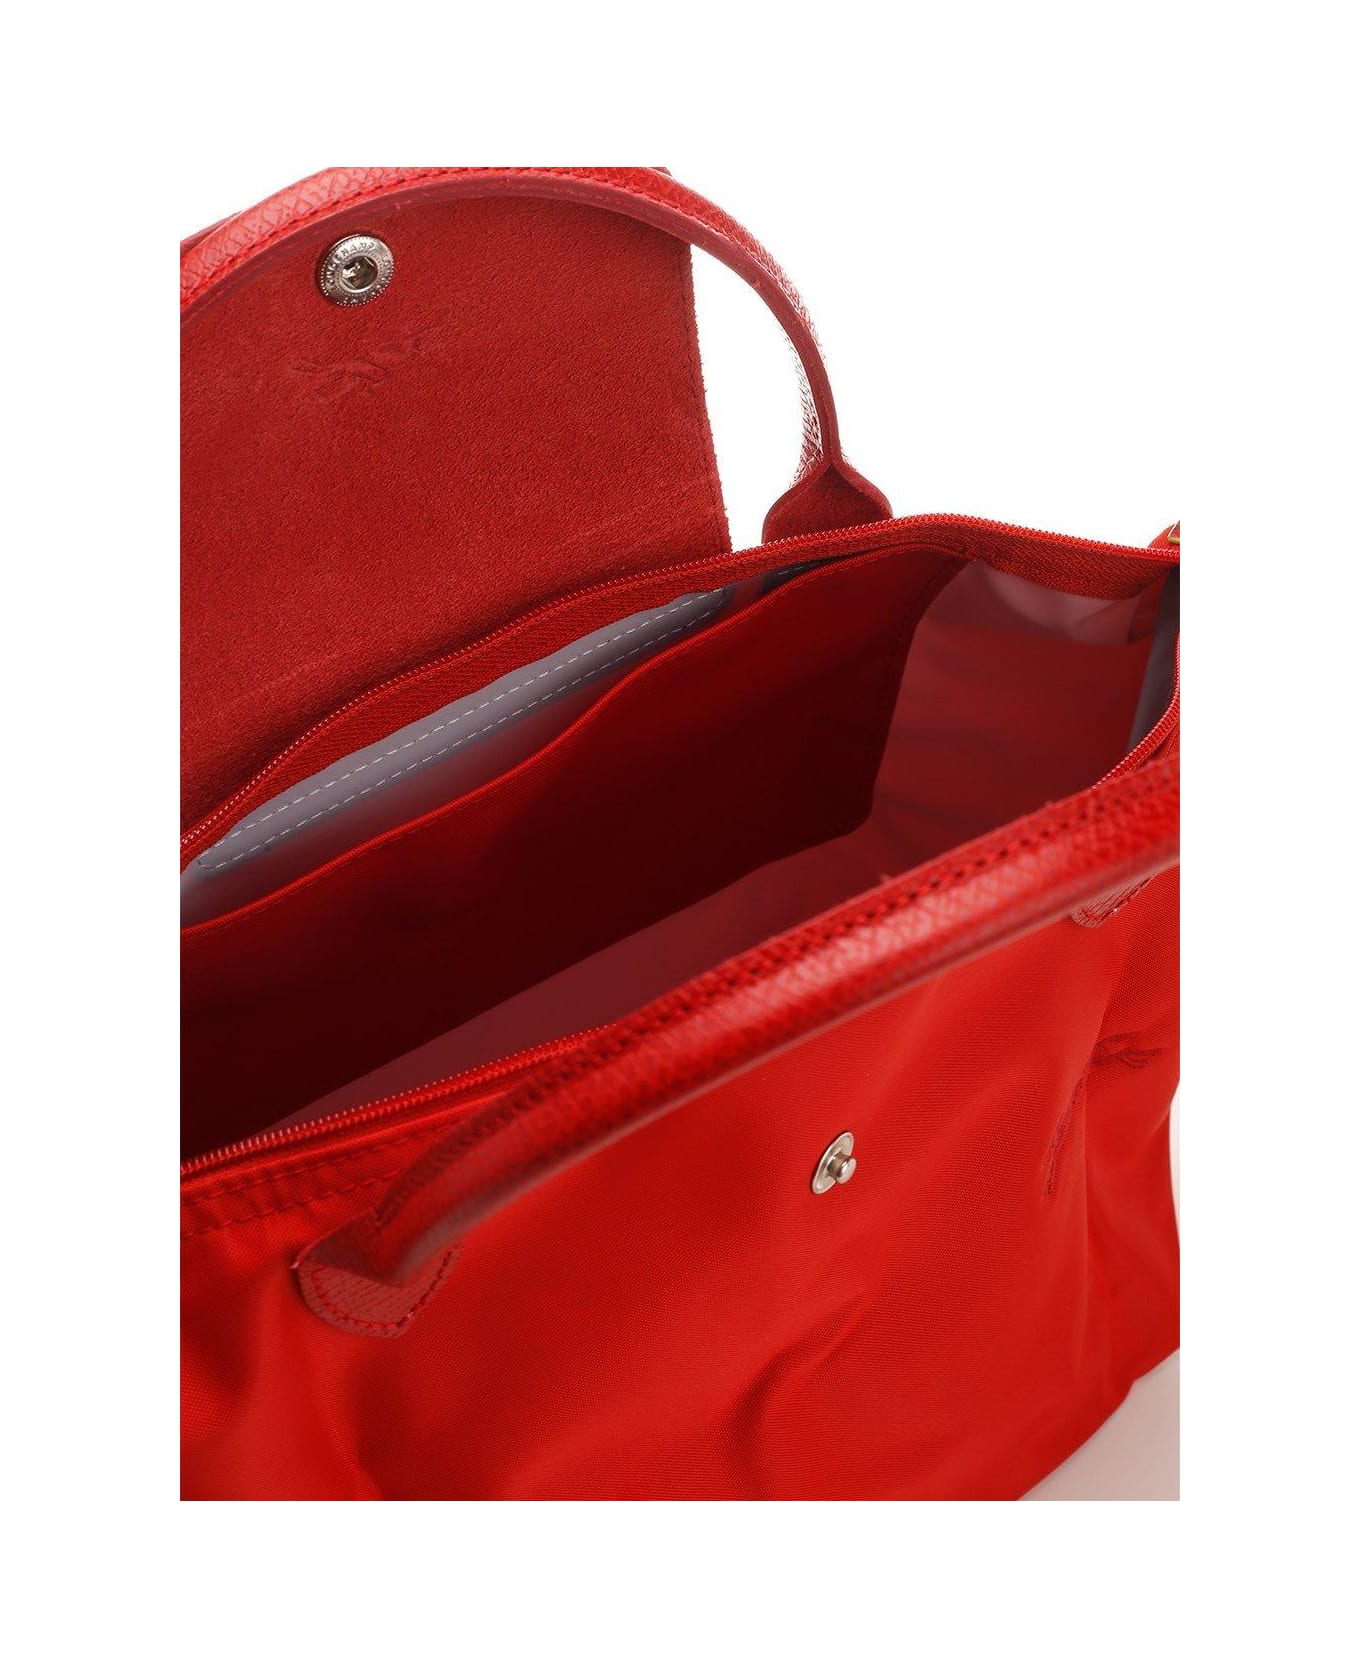 Longchamp Le Pliage Small Top Handle Bag - Red